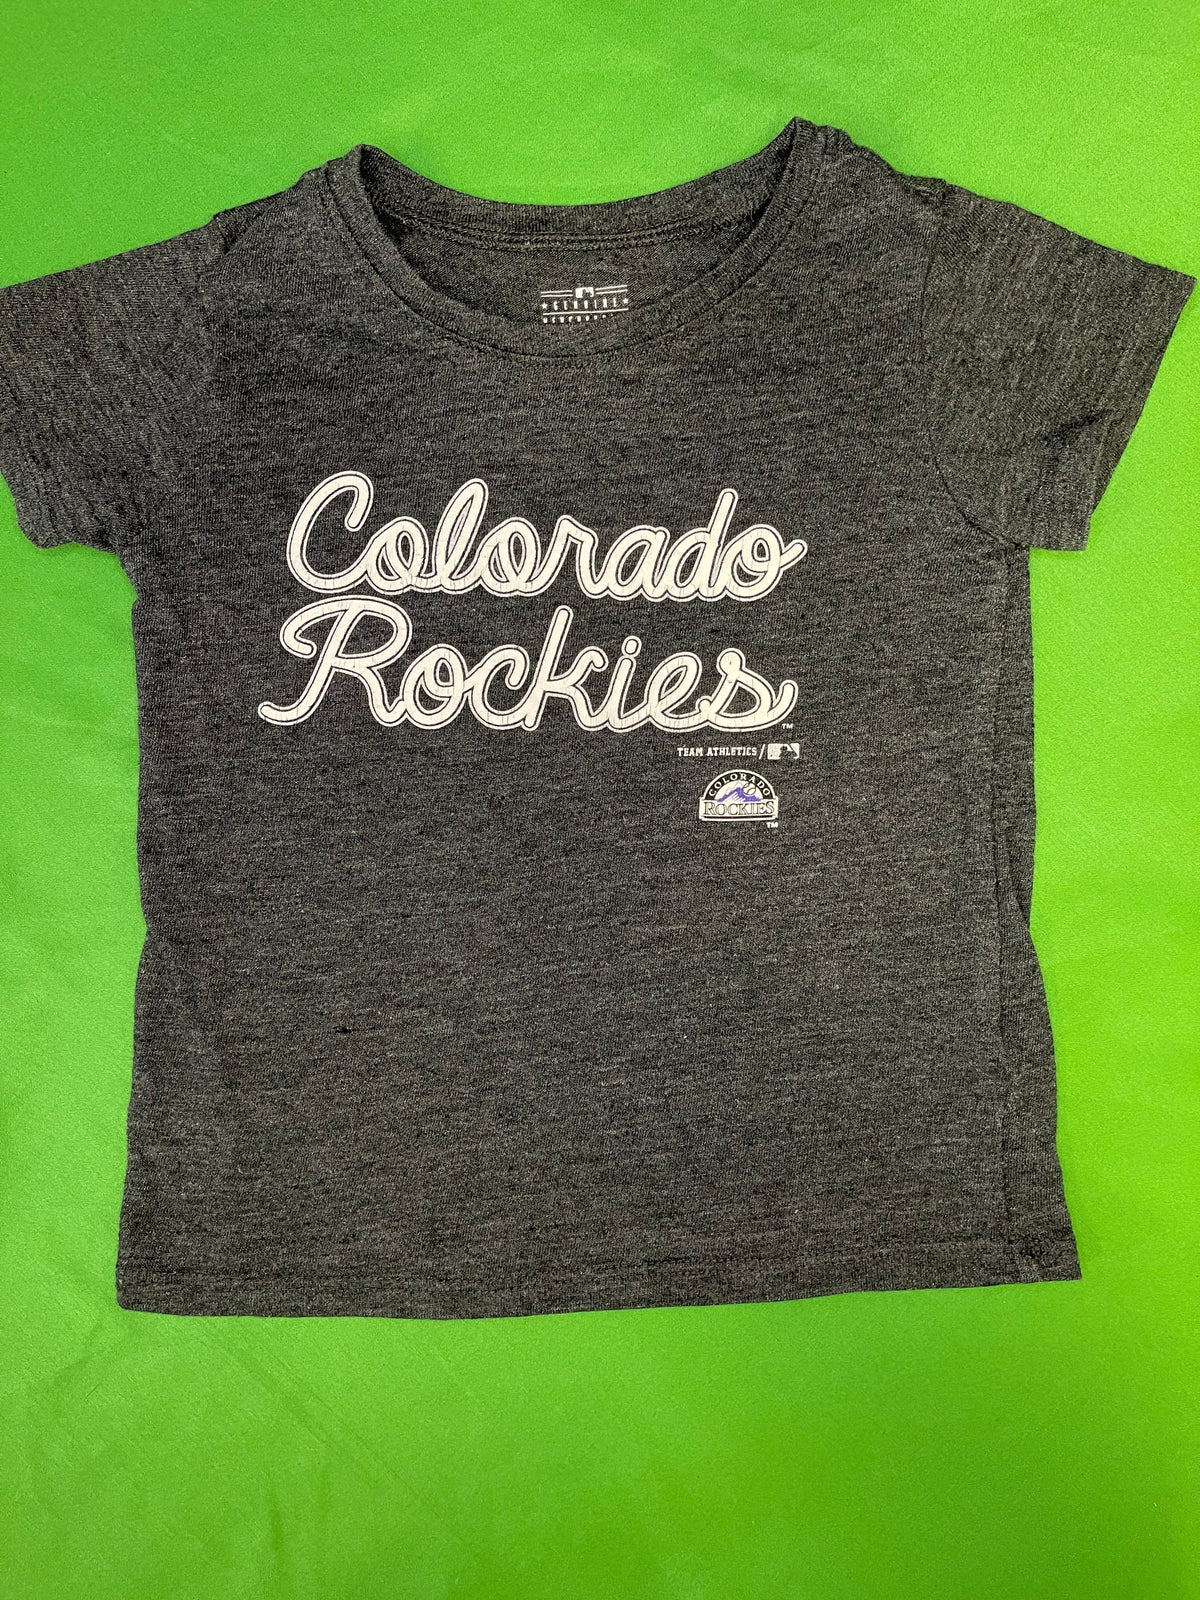 MLB Colorado Rockies Heathered Charcoal Grey T-Shirt Toddler 4T